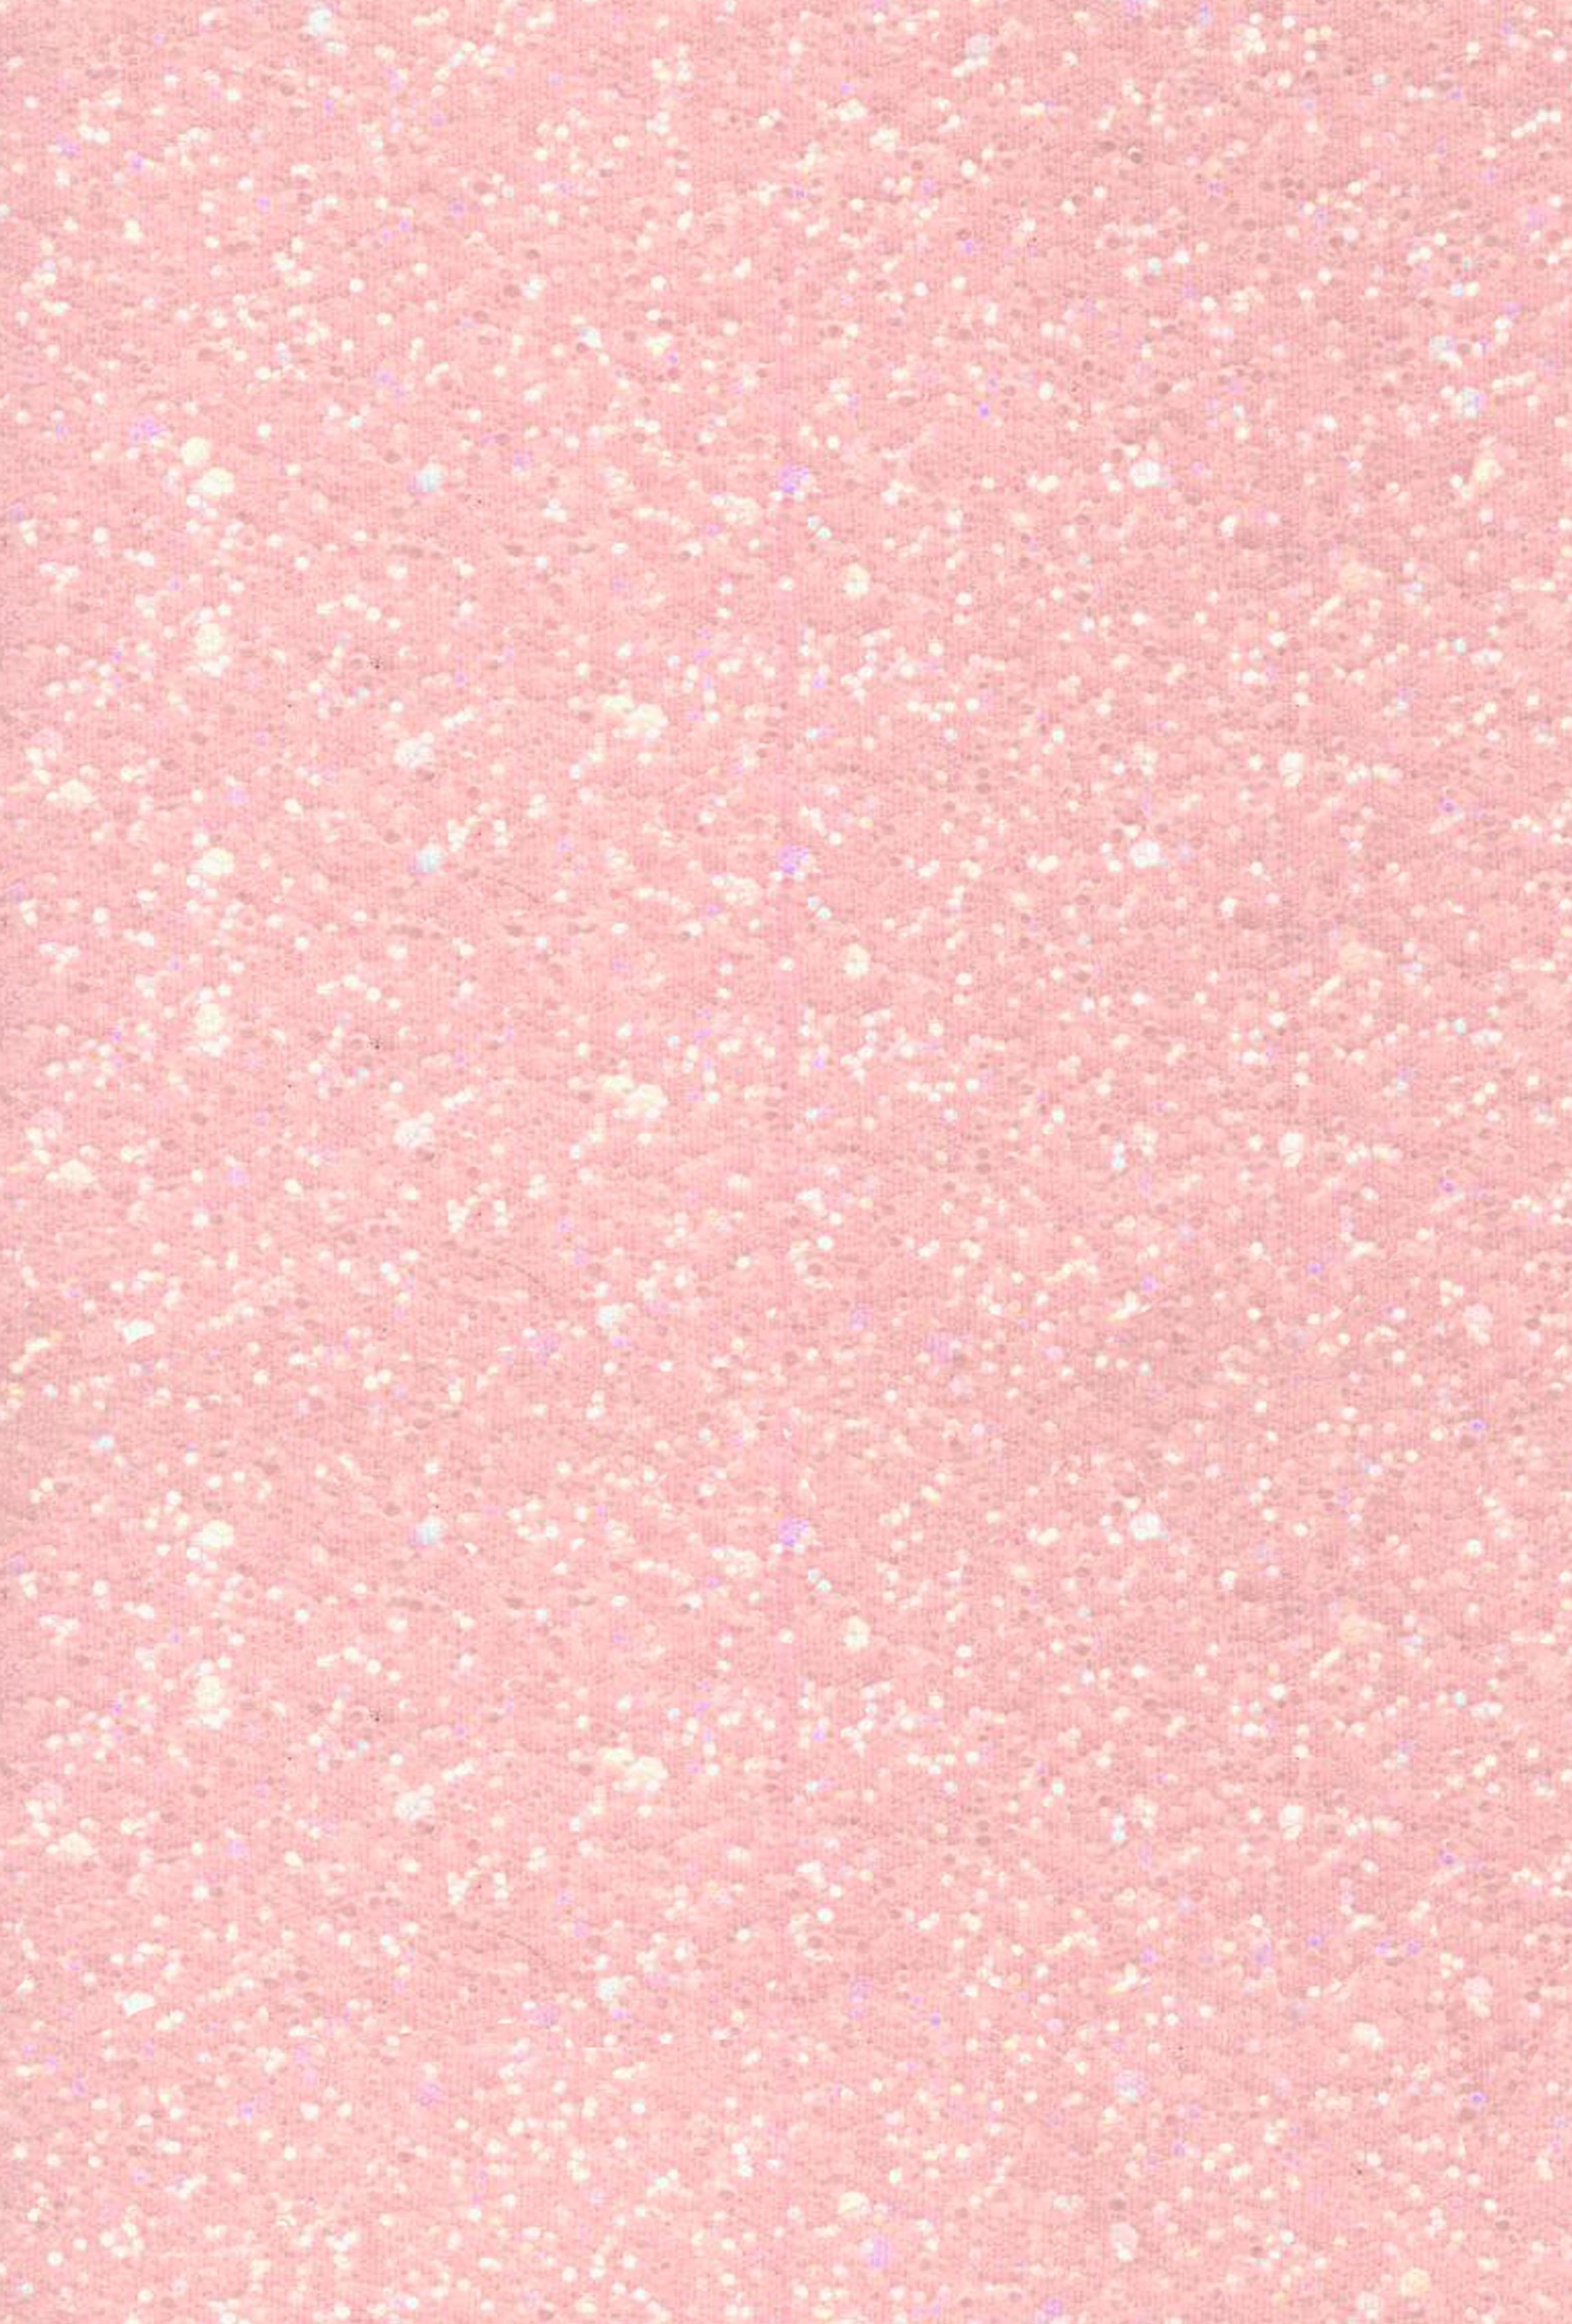 Pastel Pink Glitter Wallpaper Free Pastel Pink Glitter Background